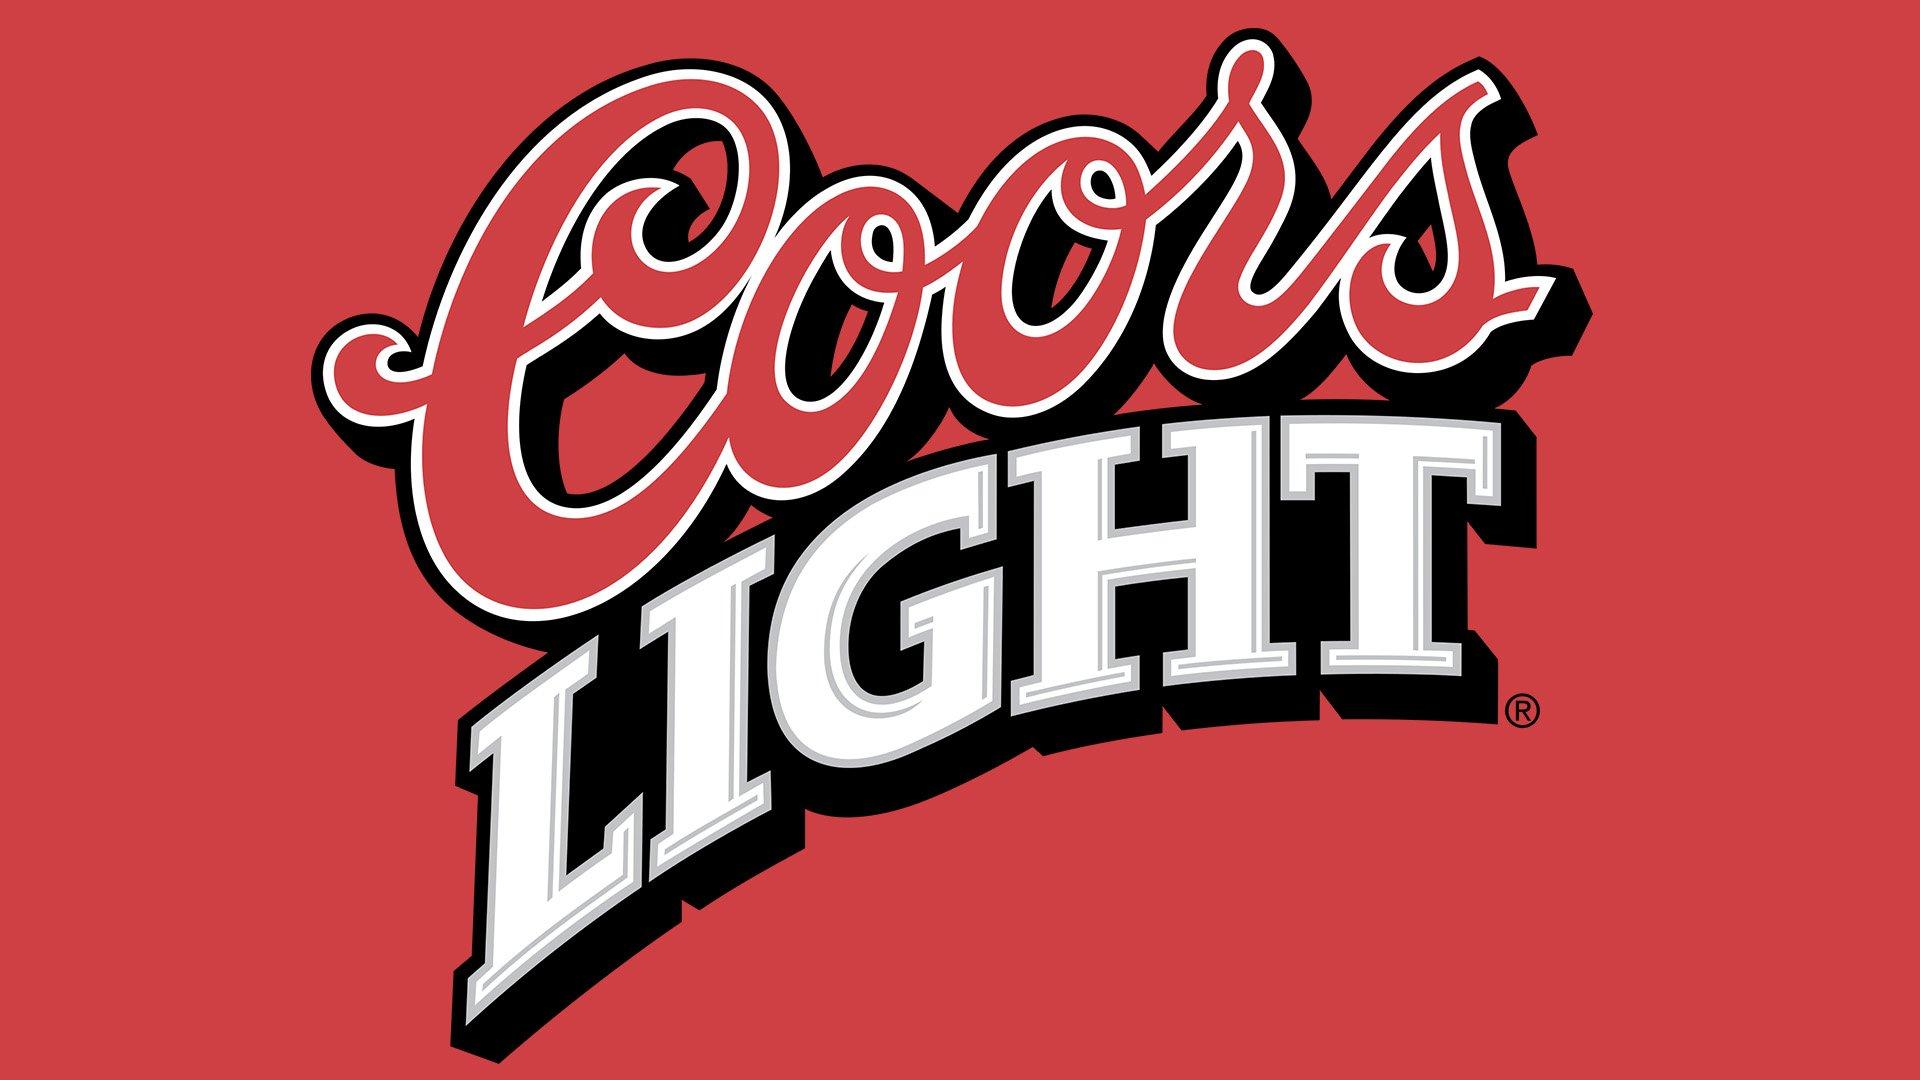 Coors Light Sign Art Print by Linda Tiepelman  Formal cooler ideas Coors  light Neon beer signs